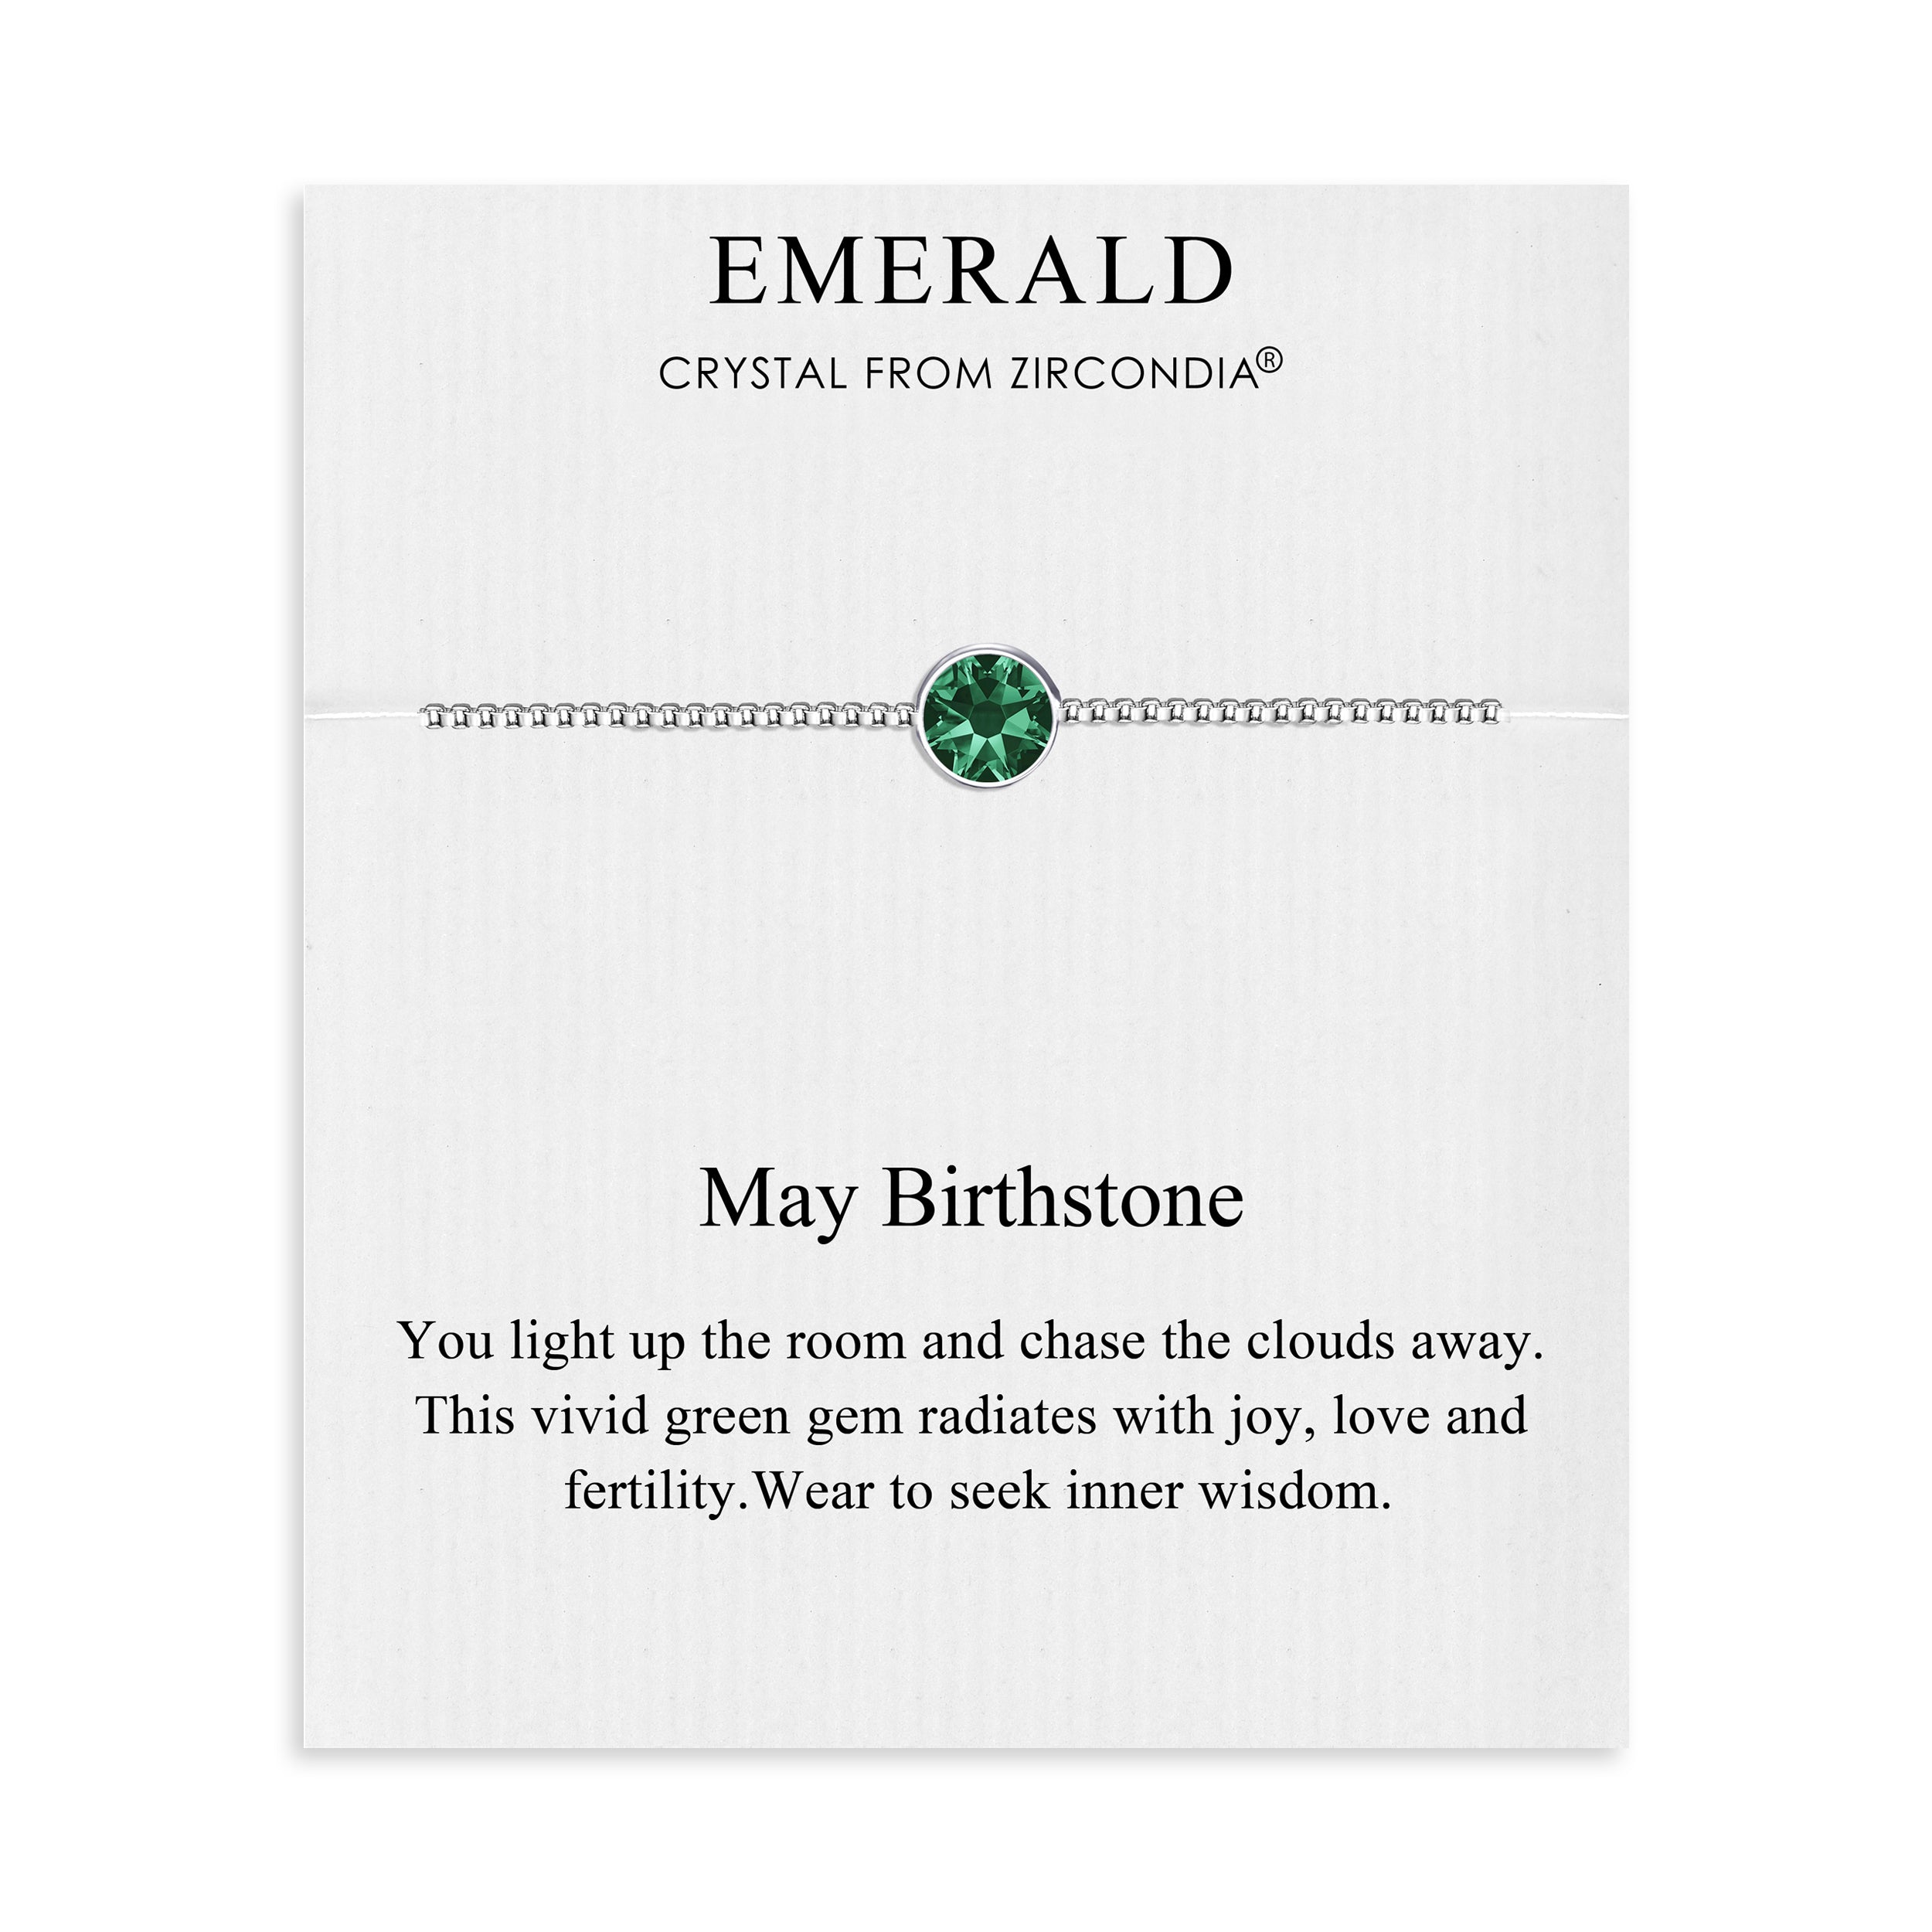 May (Emerald) Birthstone Bracelet Created with Zircondia® Crystals by Philip Jones Jewellery